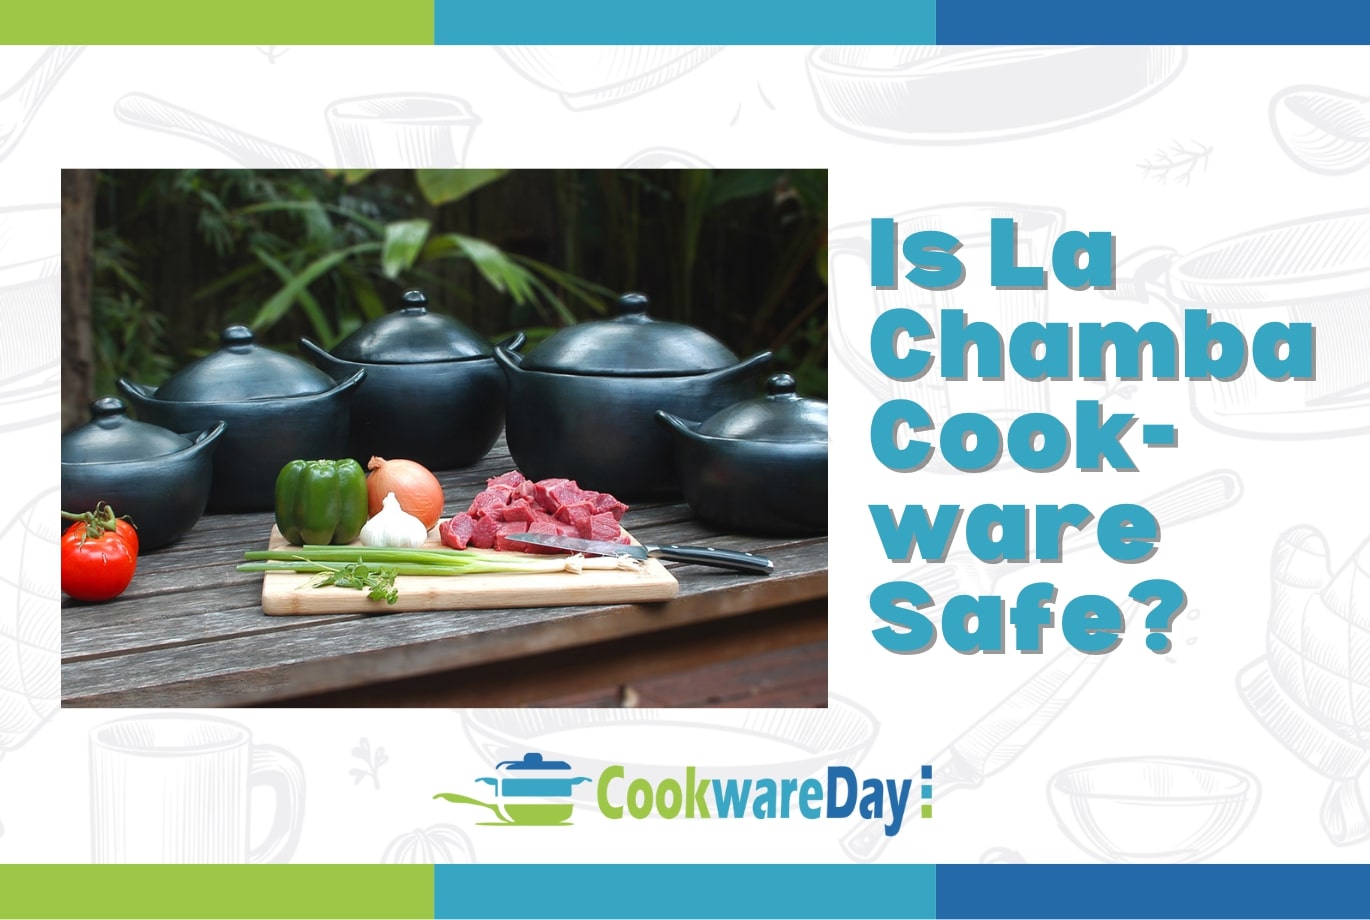 Is La Chamba Cookware Safe?